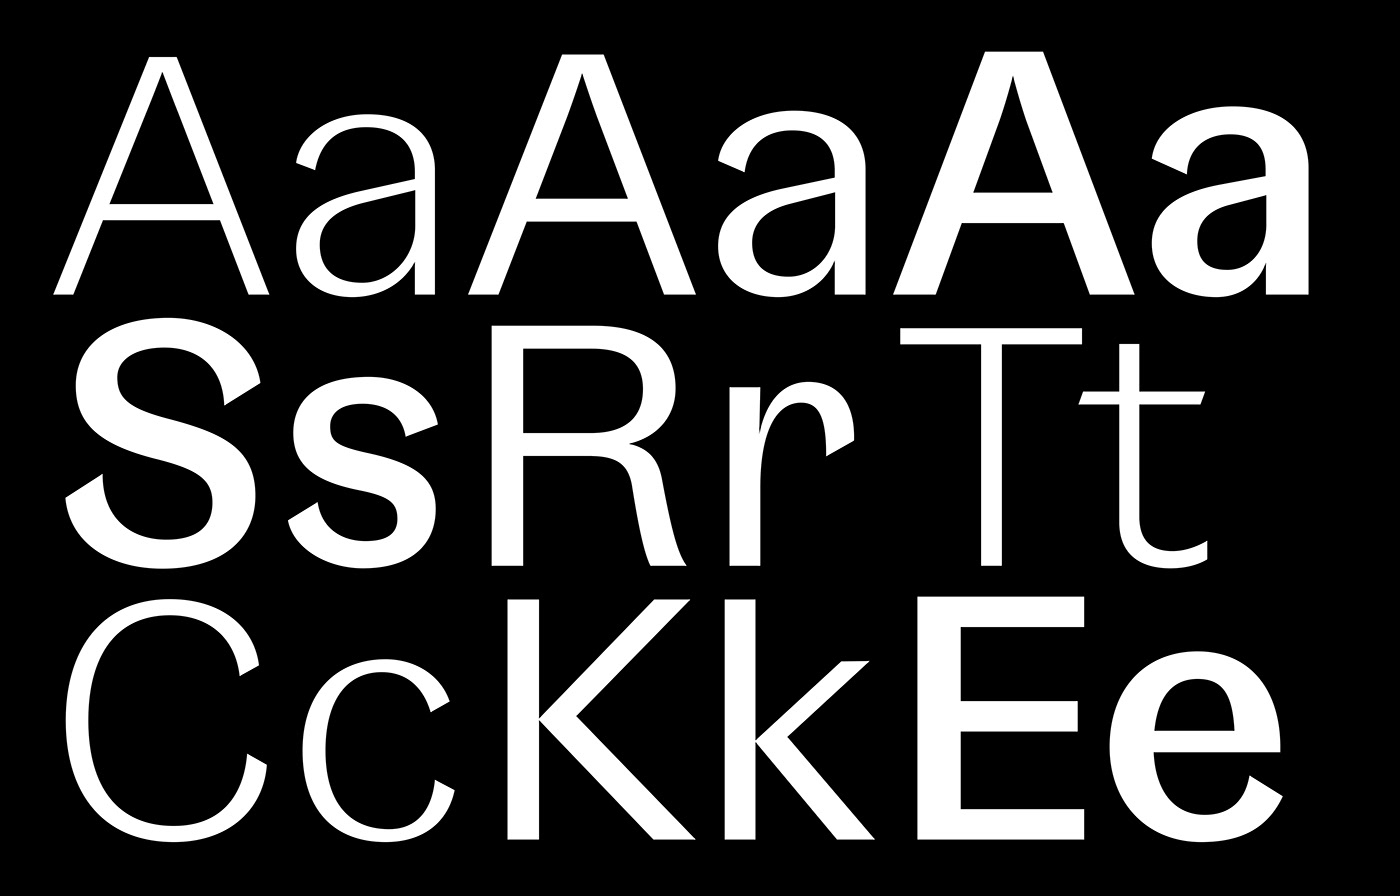 typefaces typography   typedesign design graphic design  grotesk Free font family free Free font freebie